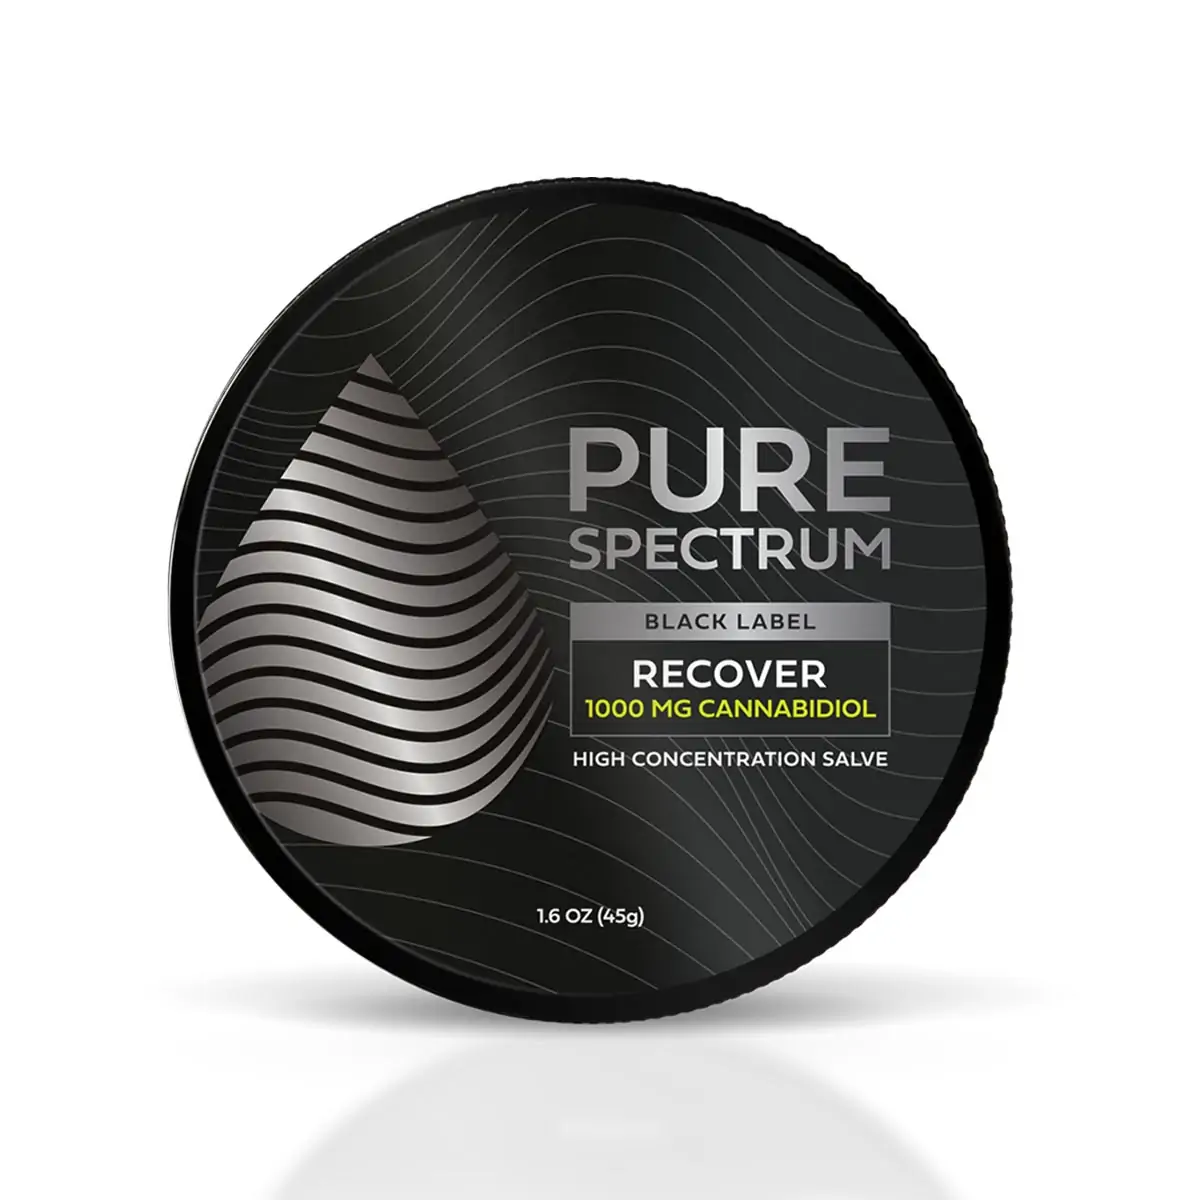 Pure Spectrum, Recover High Concentration Salve, 1.6oz, 1000mg CBD